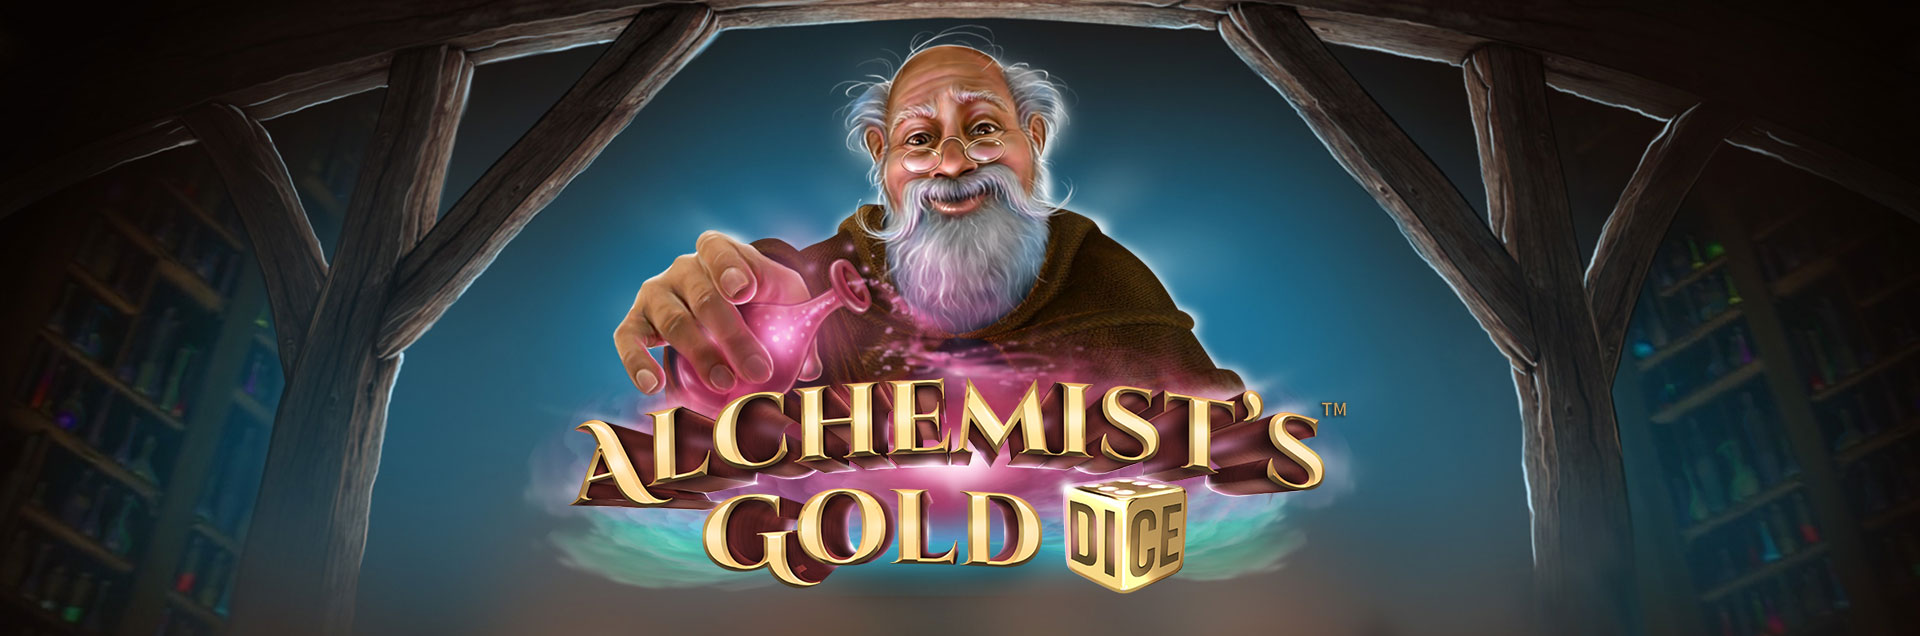 Alchemists Gold Dice header games